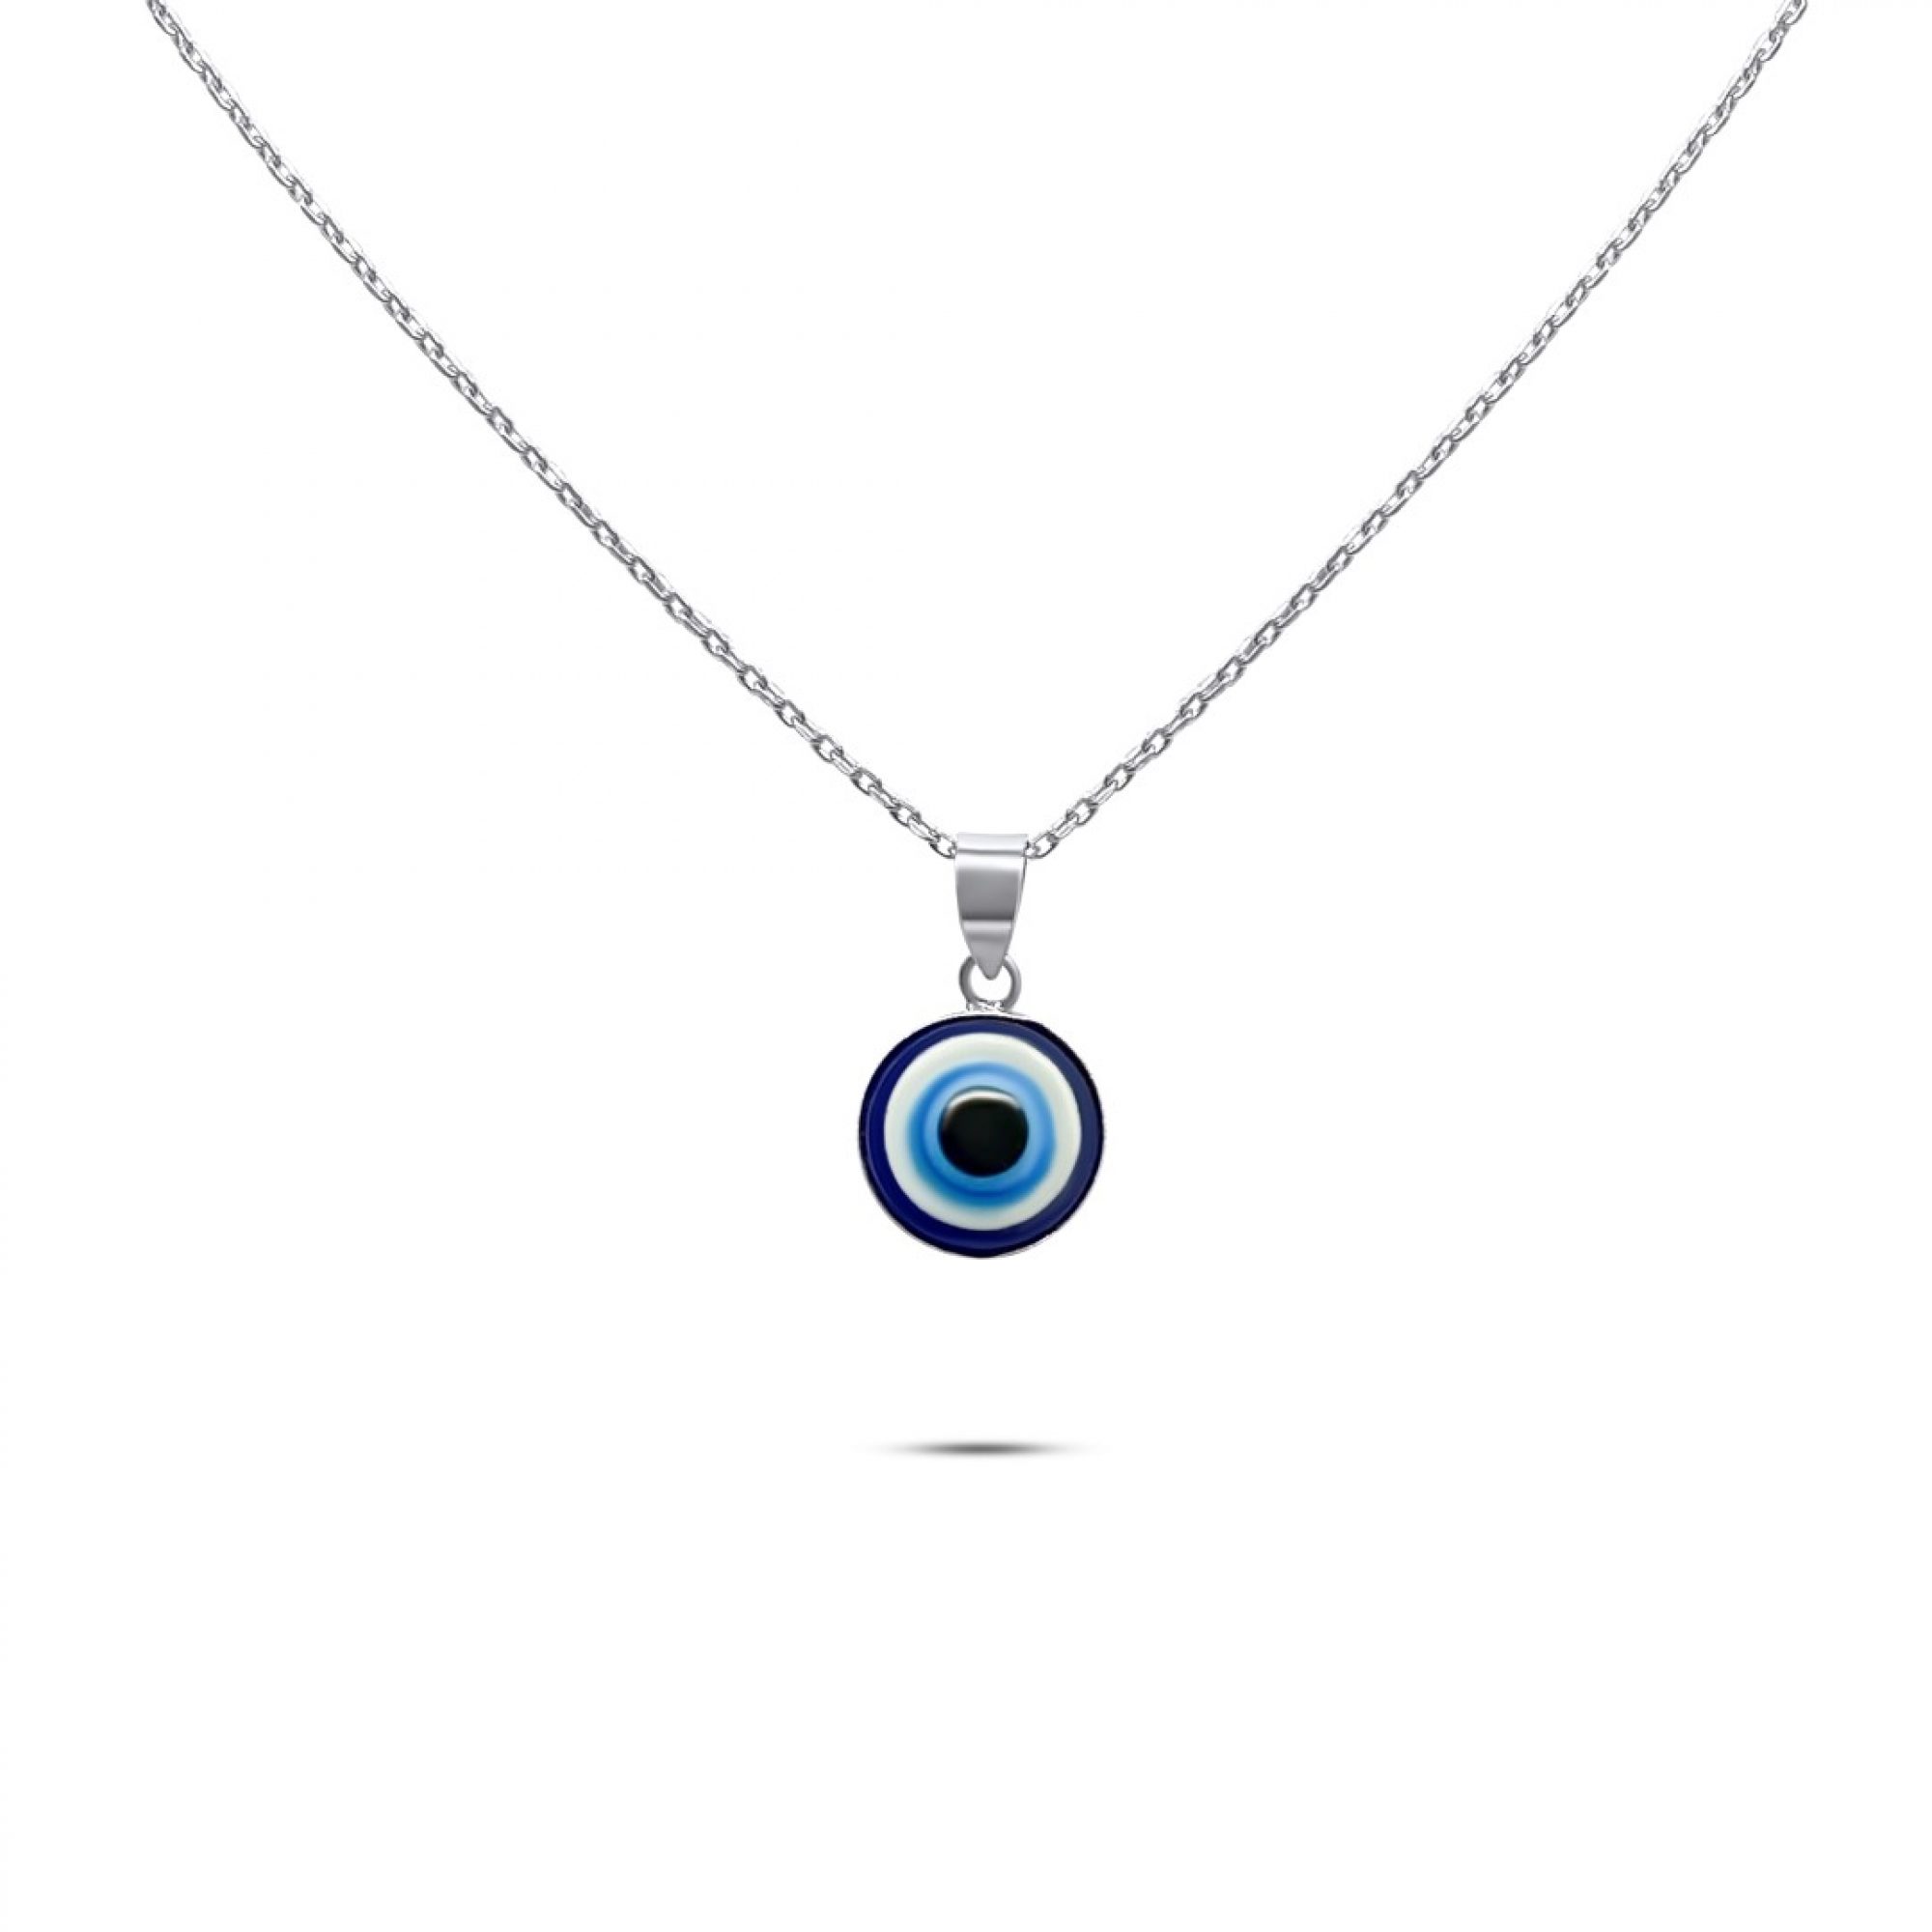 Eye pendant necklace 